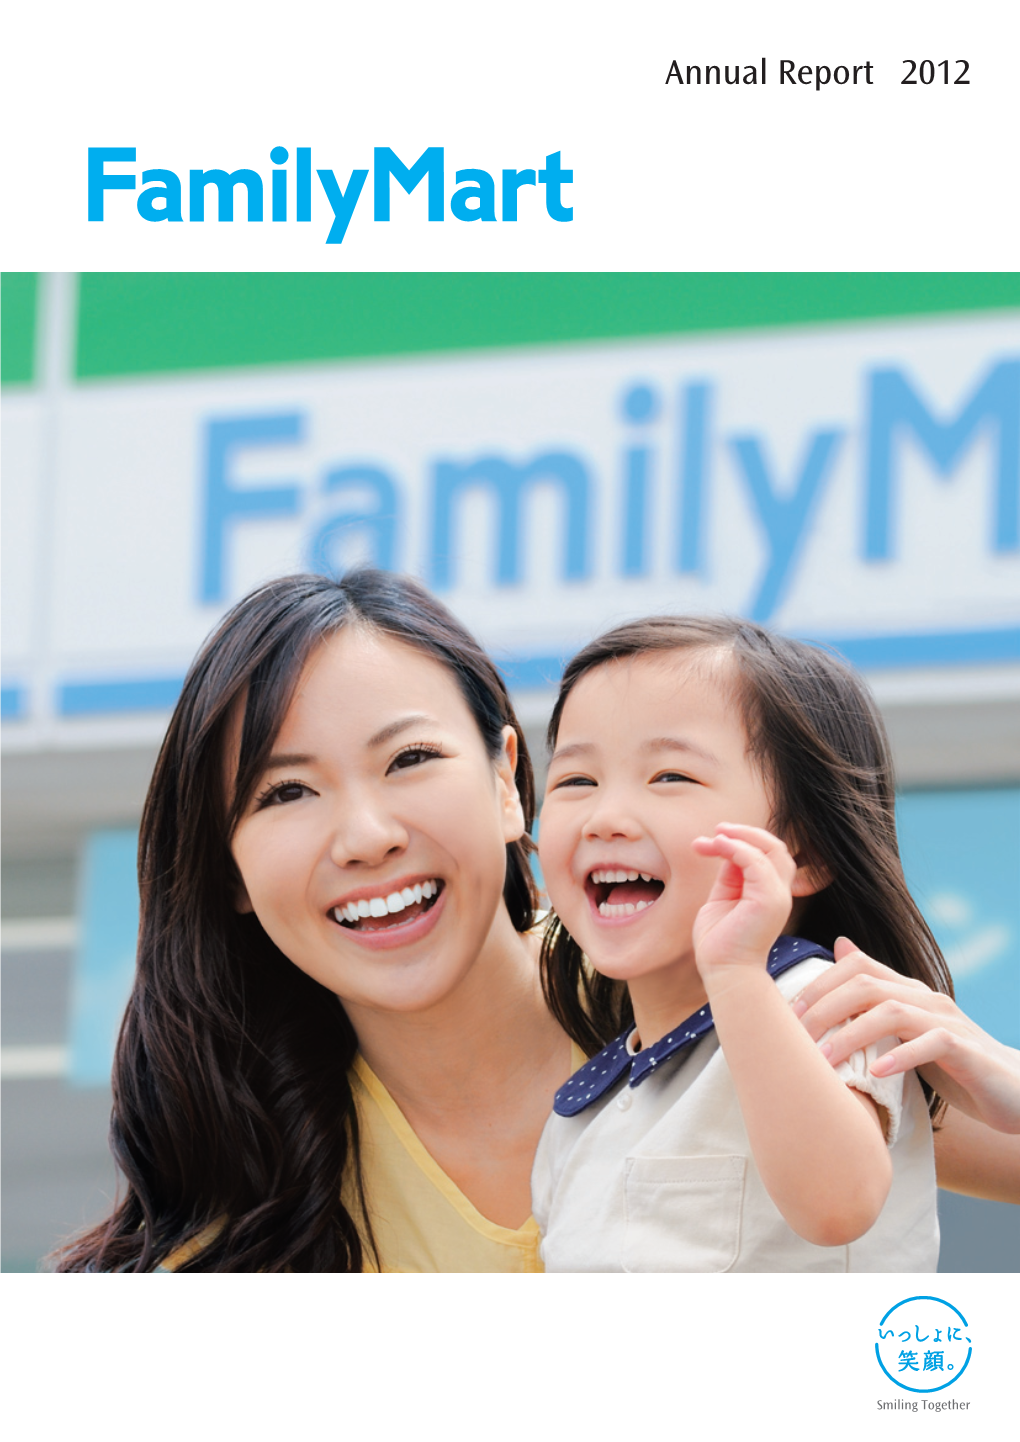 Annual Report 2012 Familymart Co., Ltd